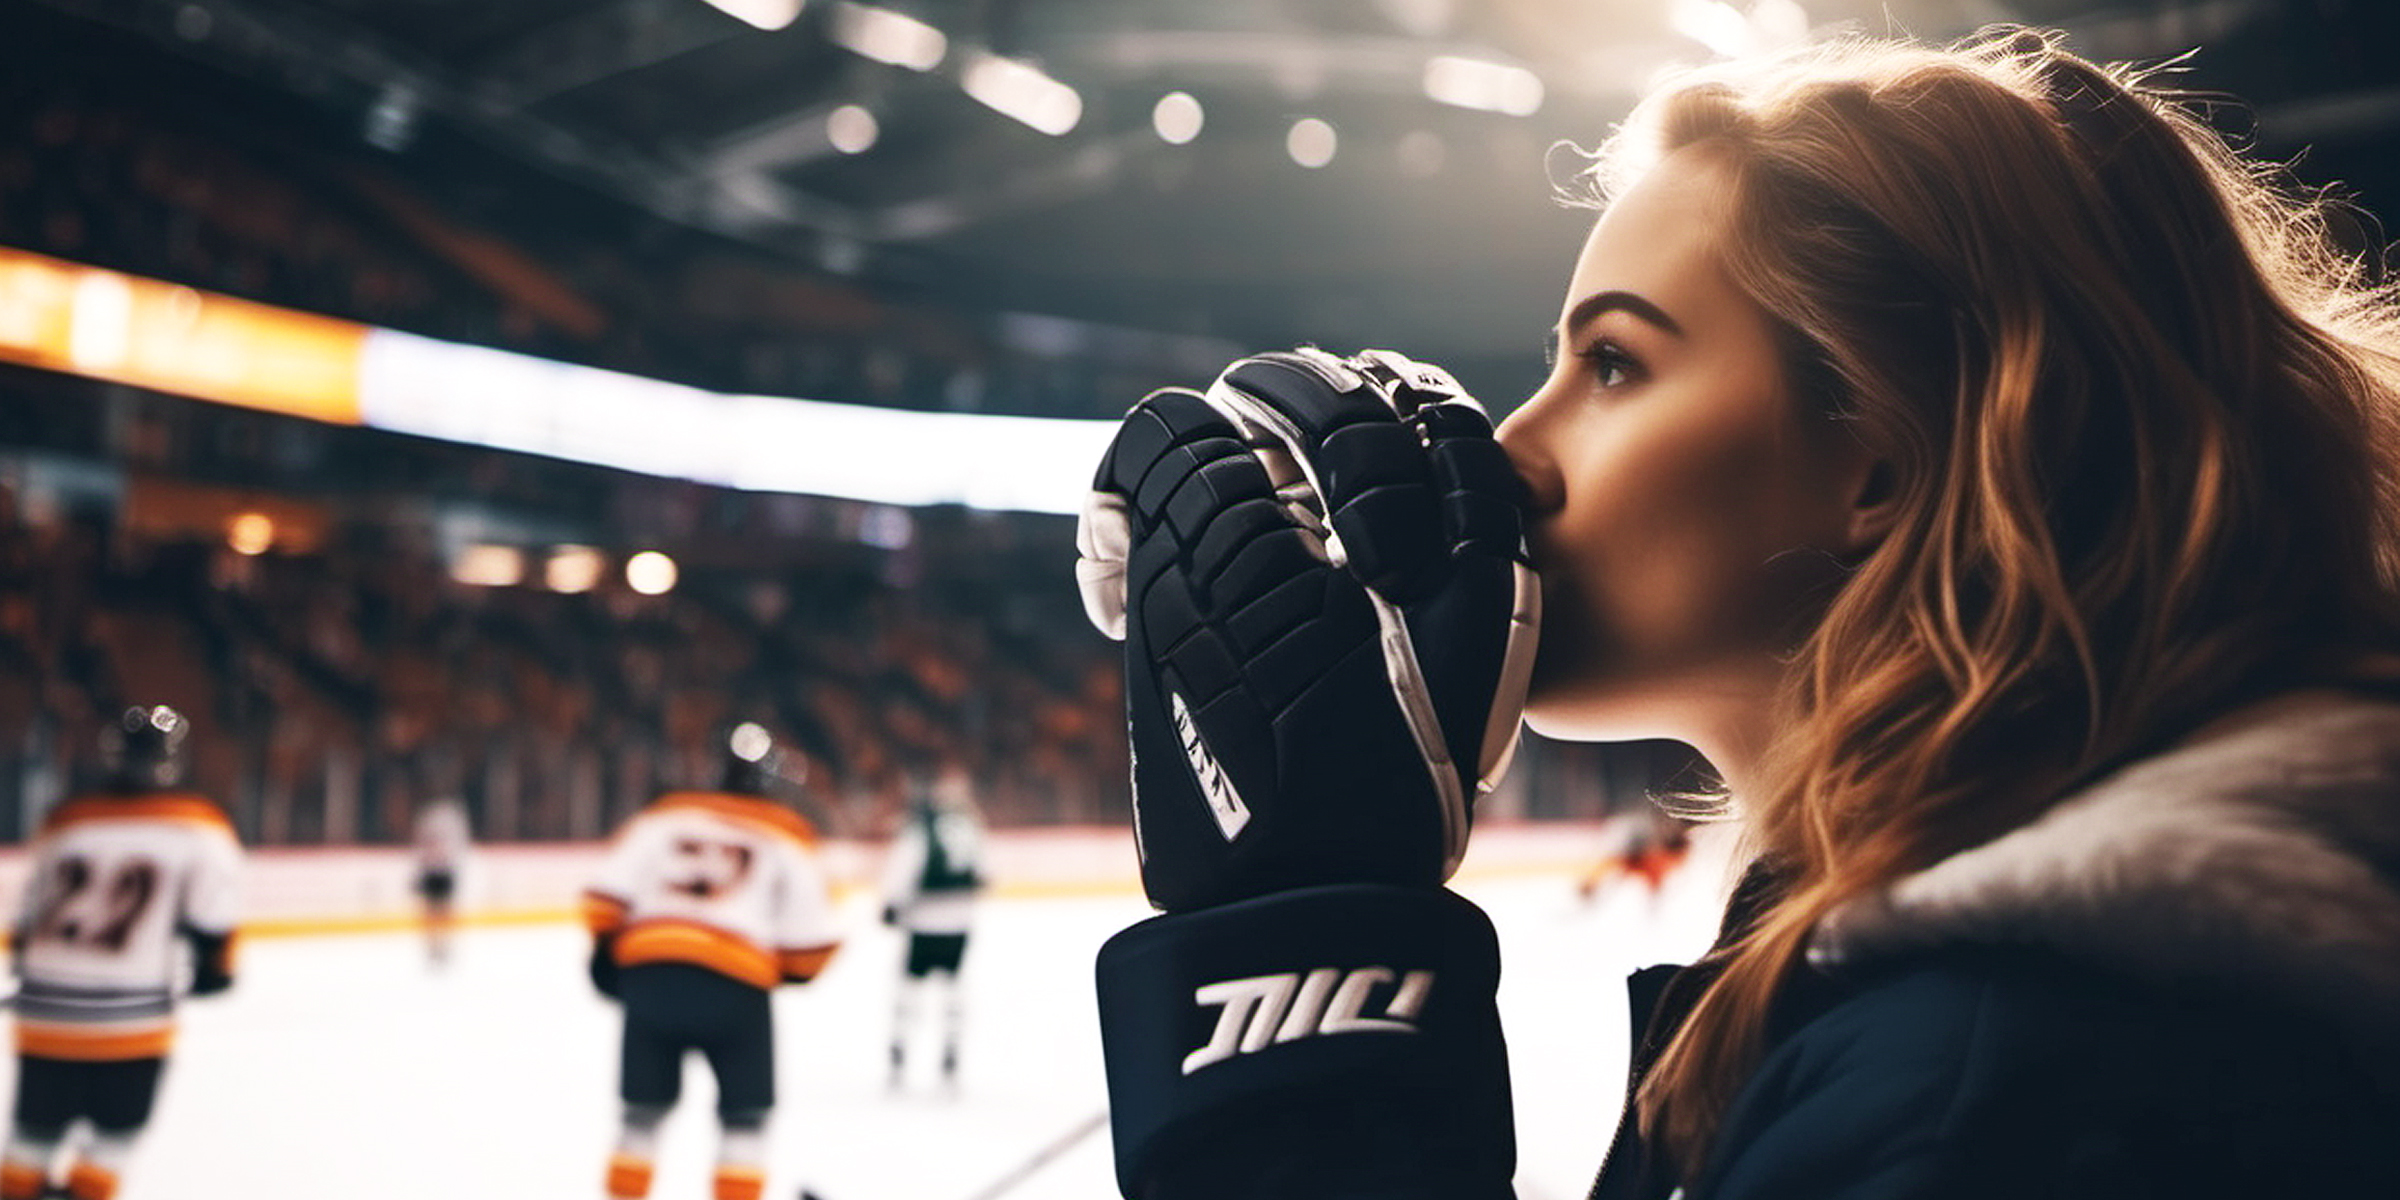 A woman at a hockey game | Source: Amomama